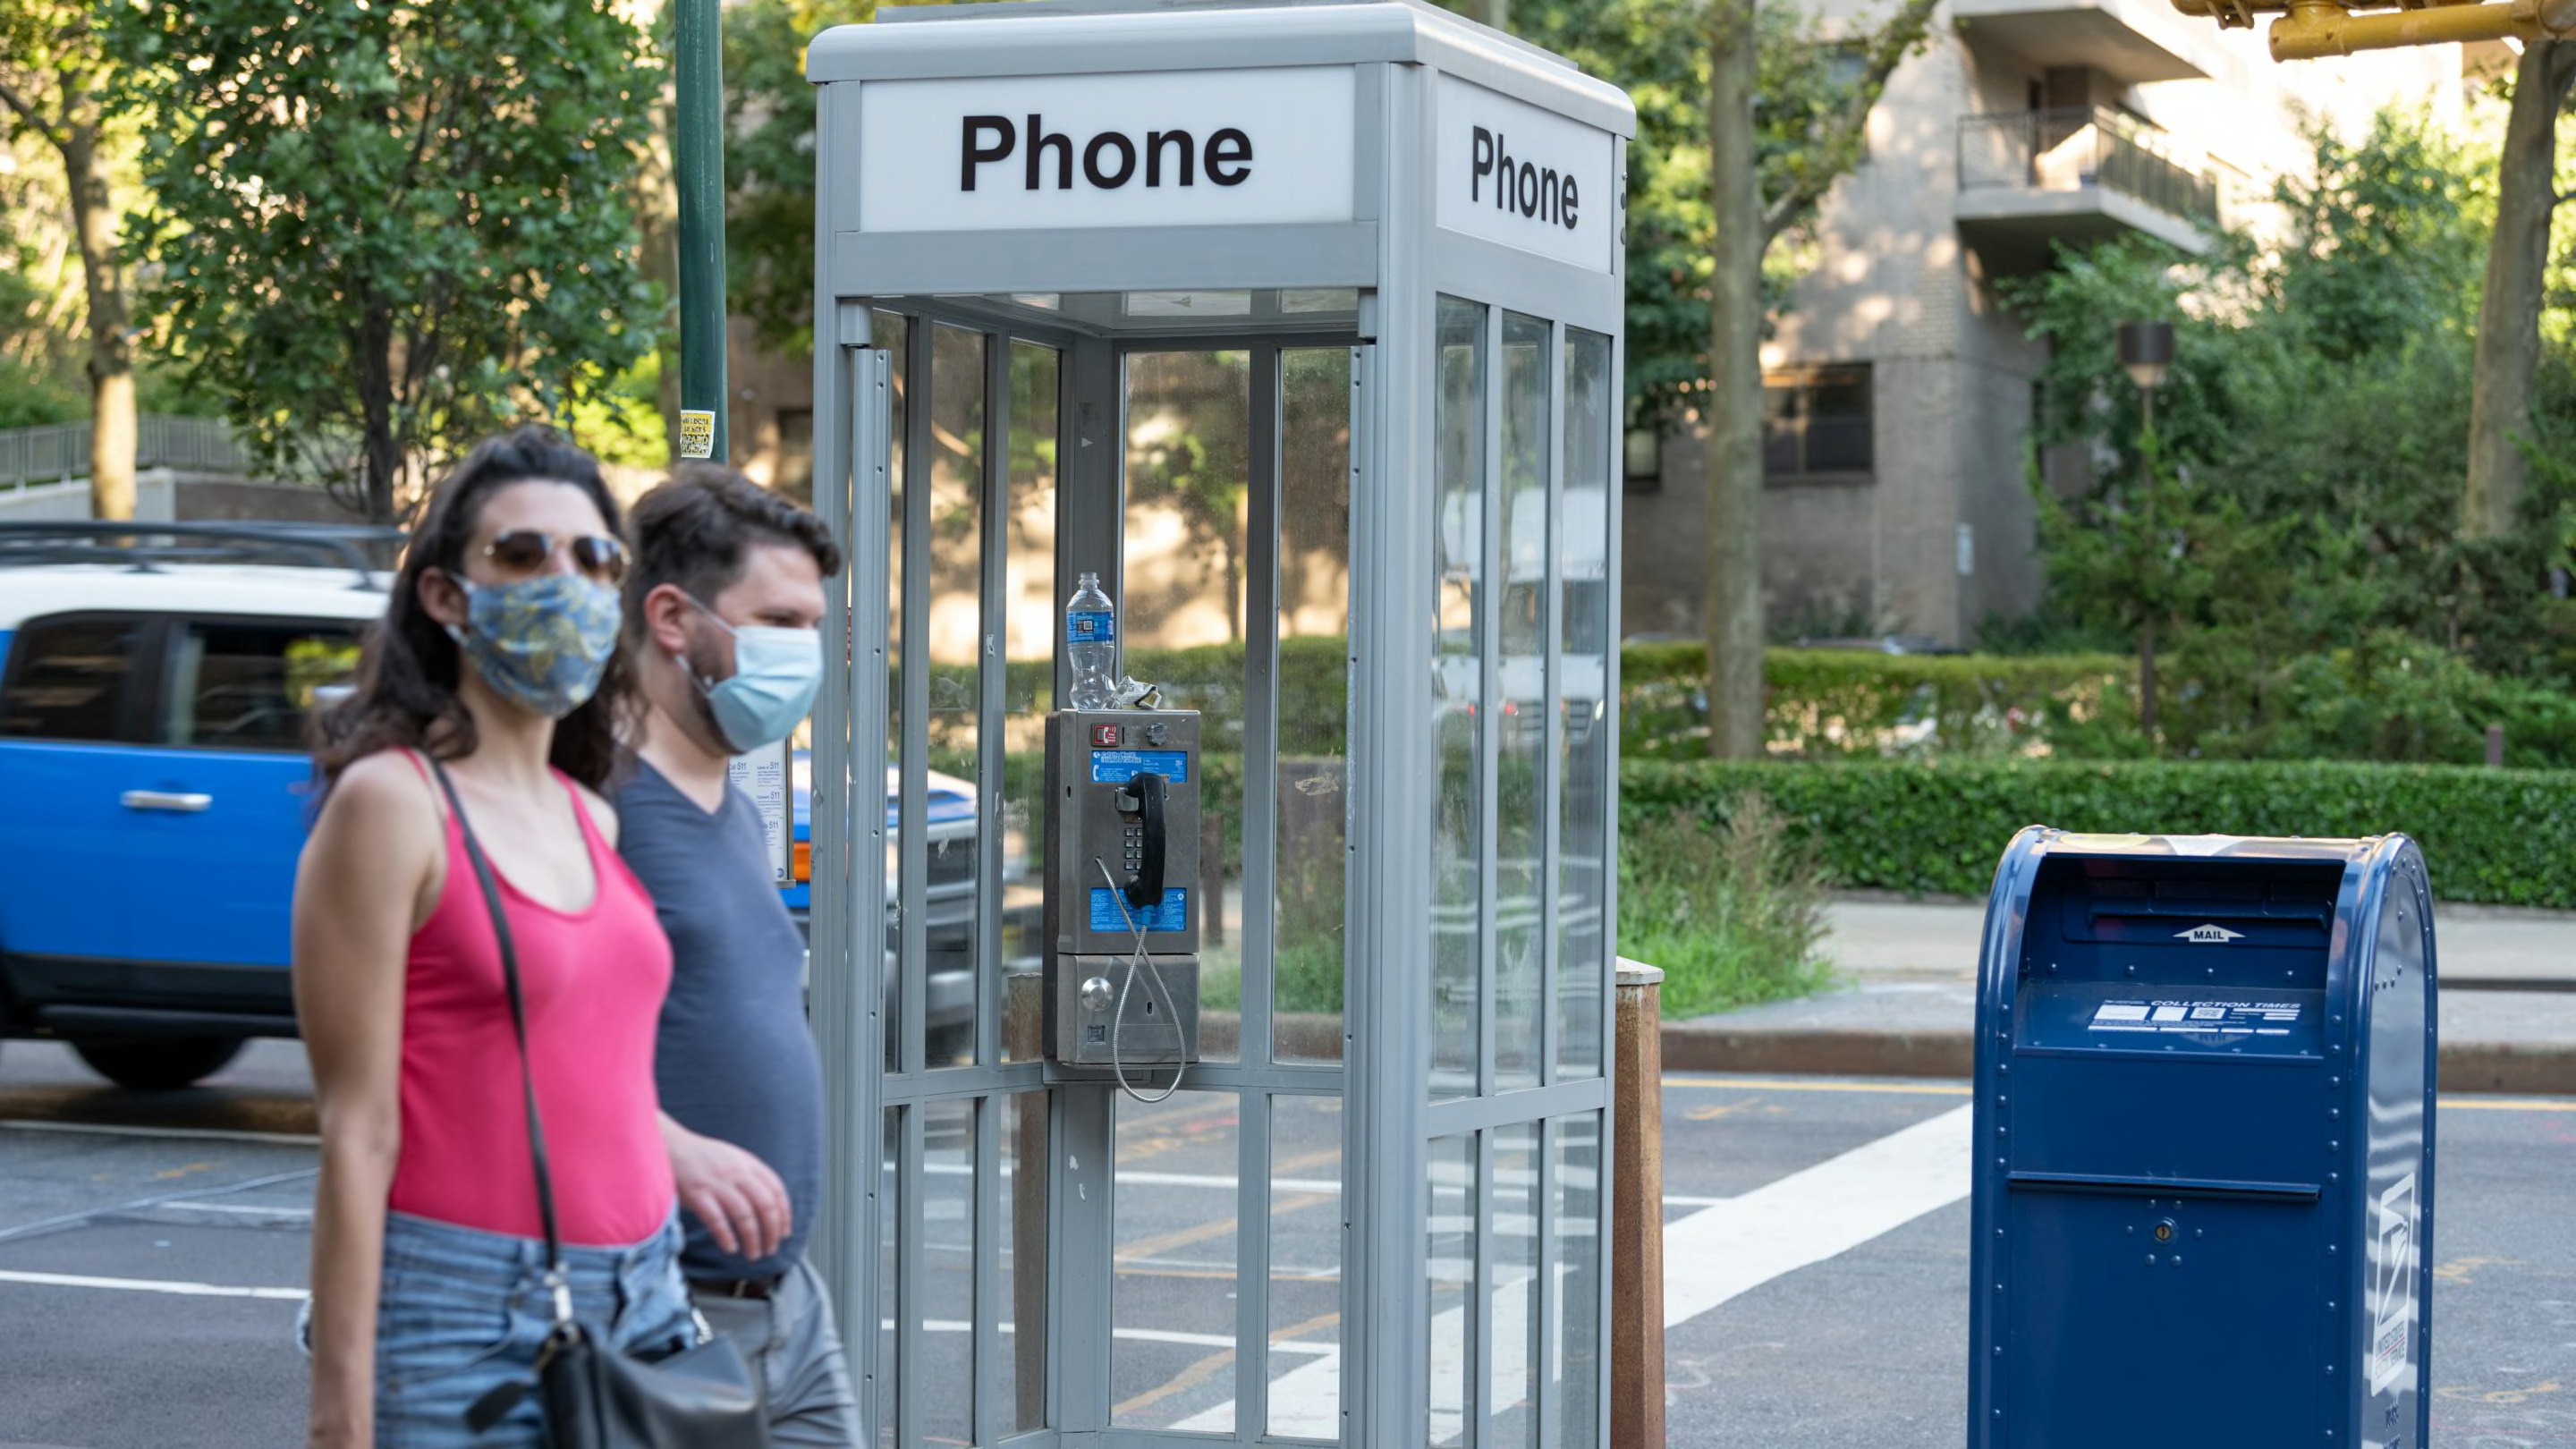 Last Public Payphone in Manhattan Removed